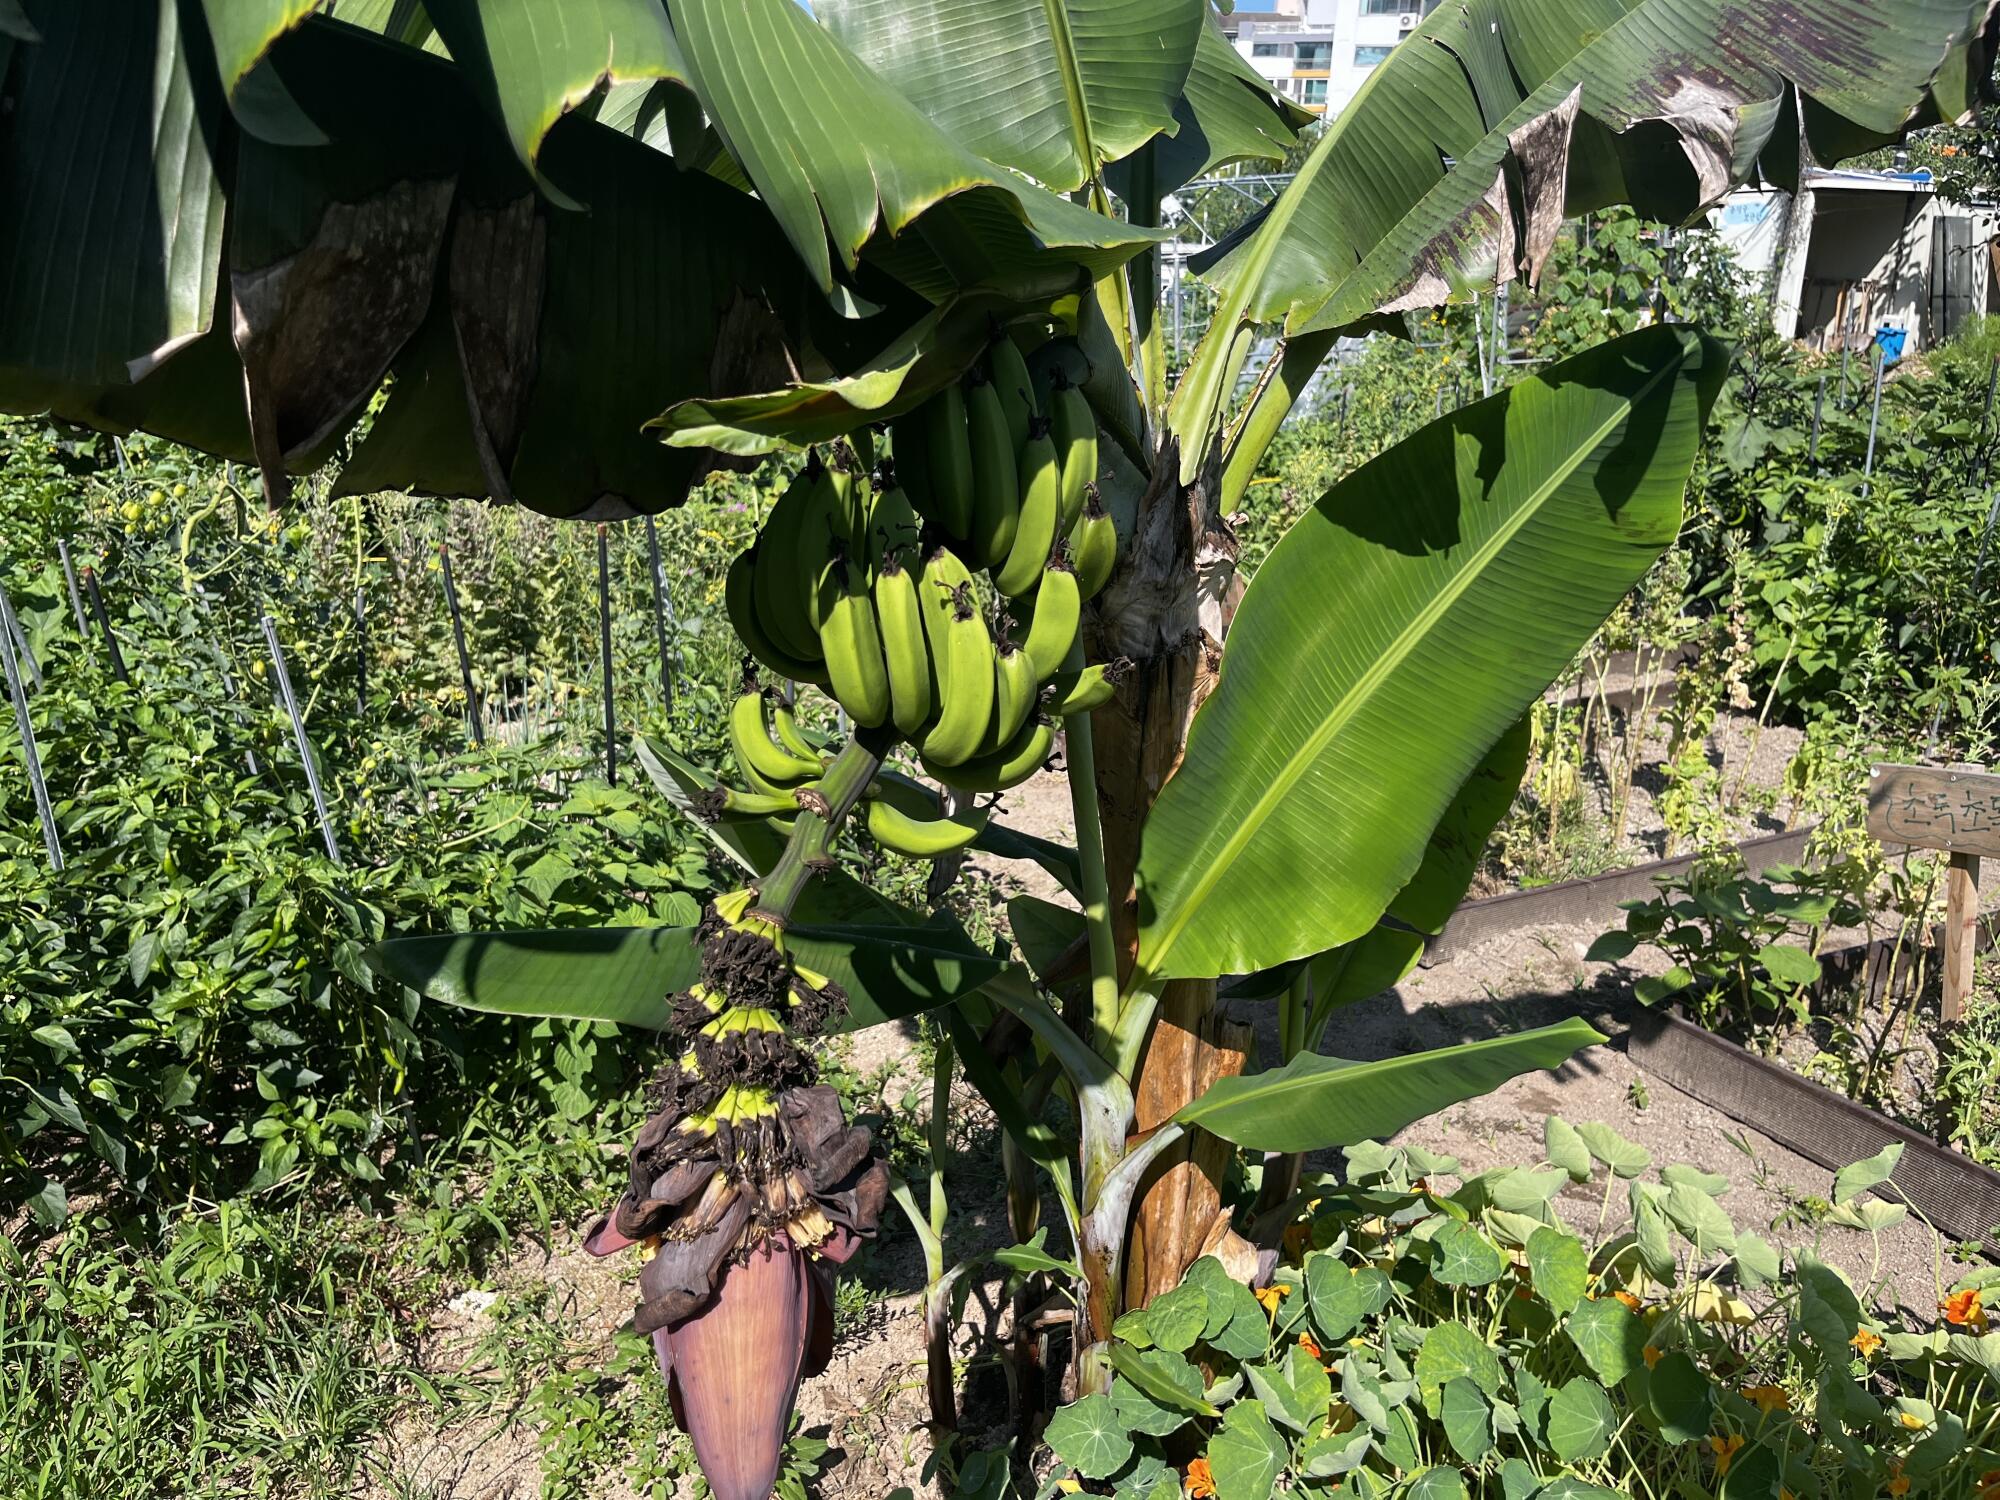 Small green bananas growing on a tree